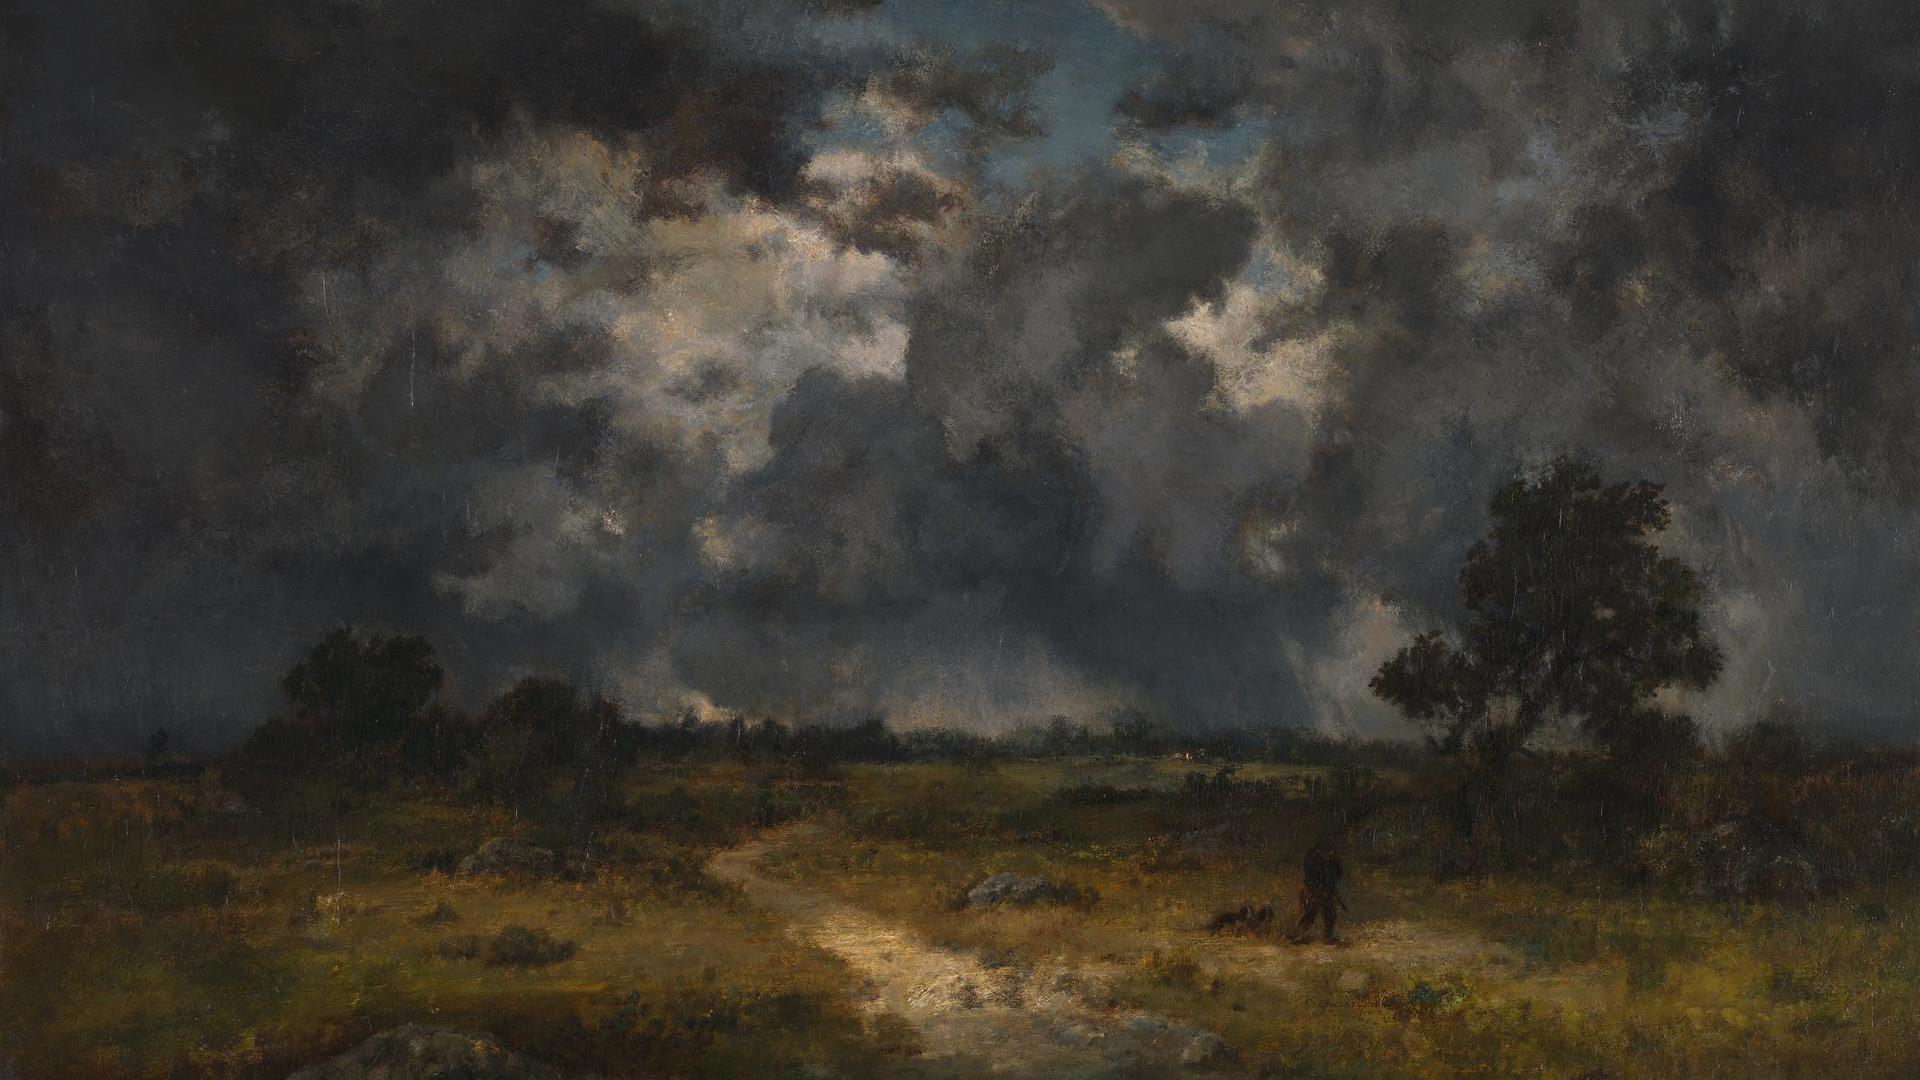 The Storm by Narcisse-Virgilio Diaz de la Peña